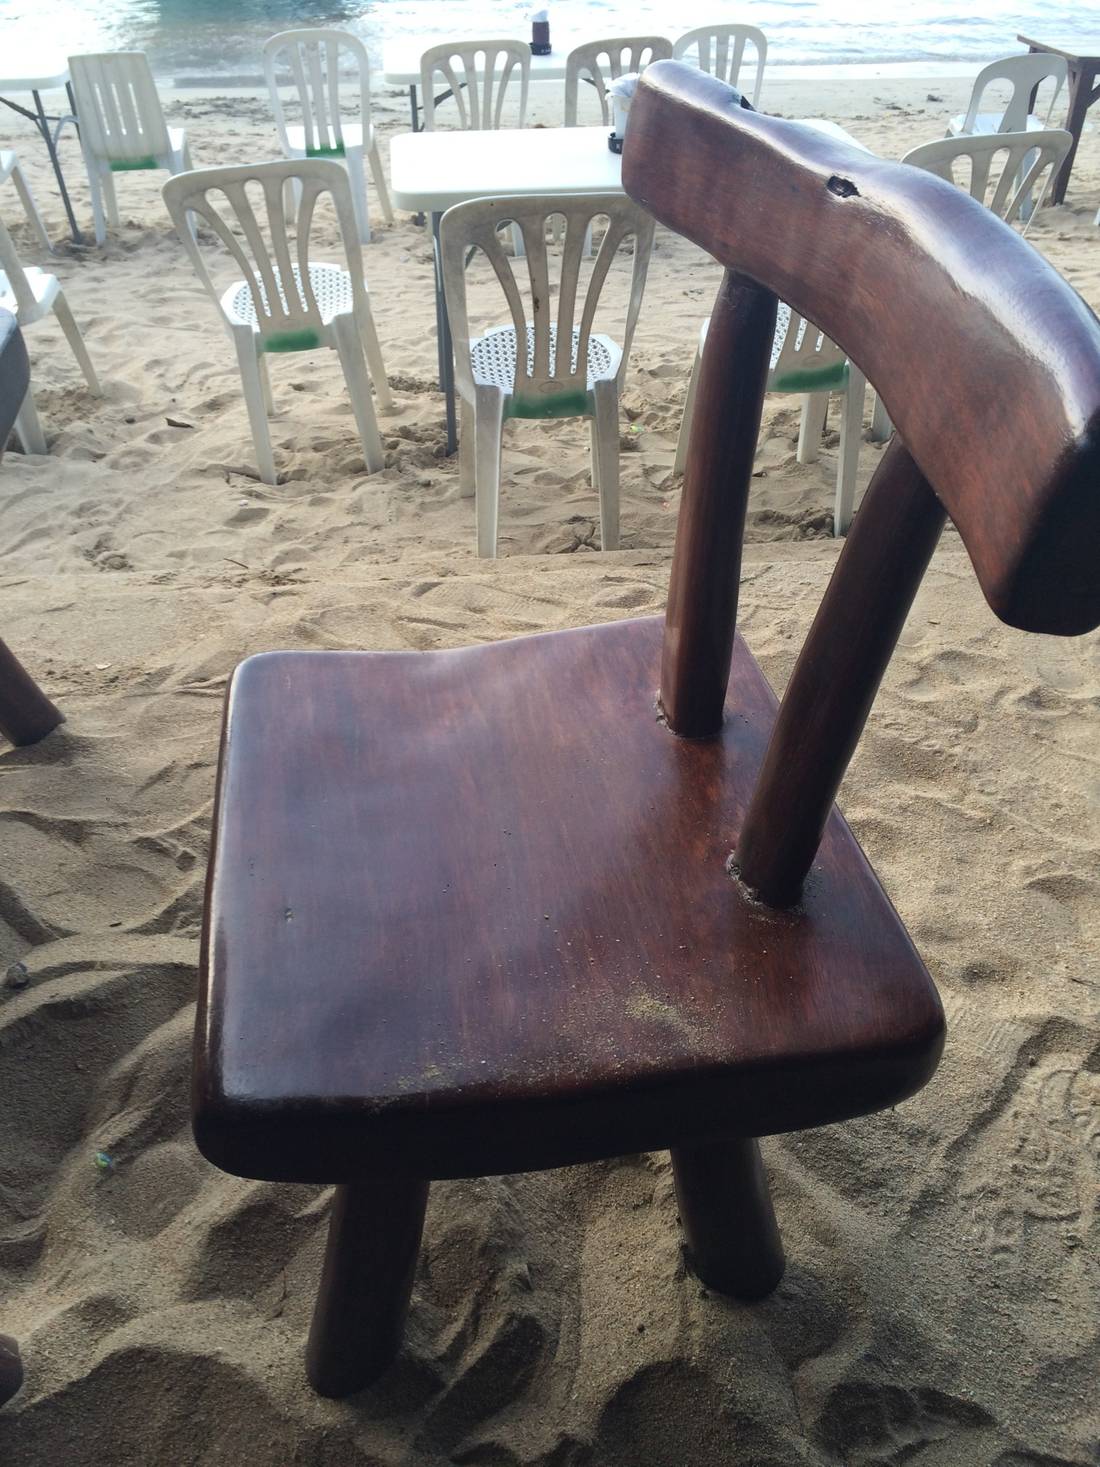 Soft smooth chair on the beach.